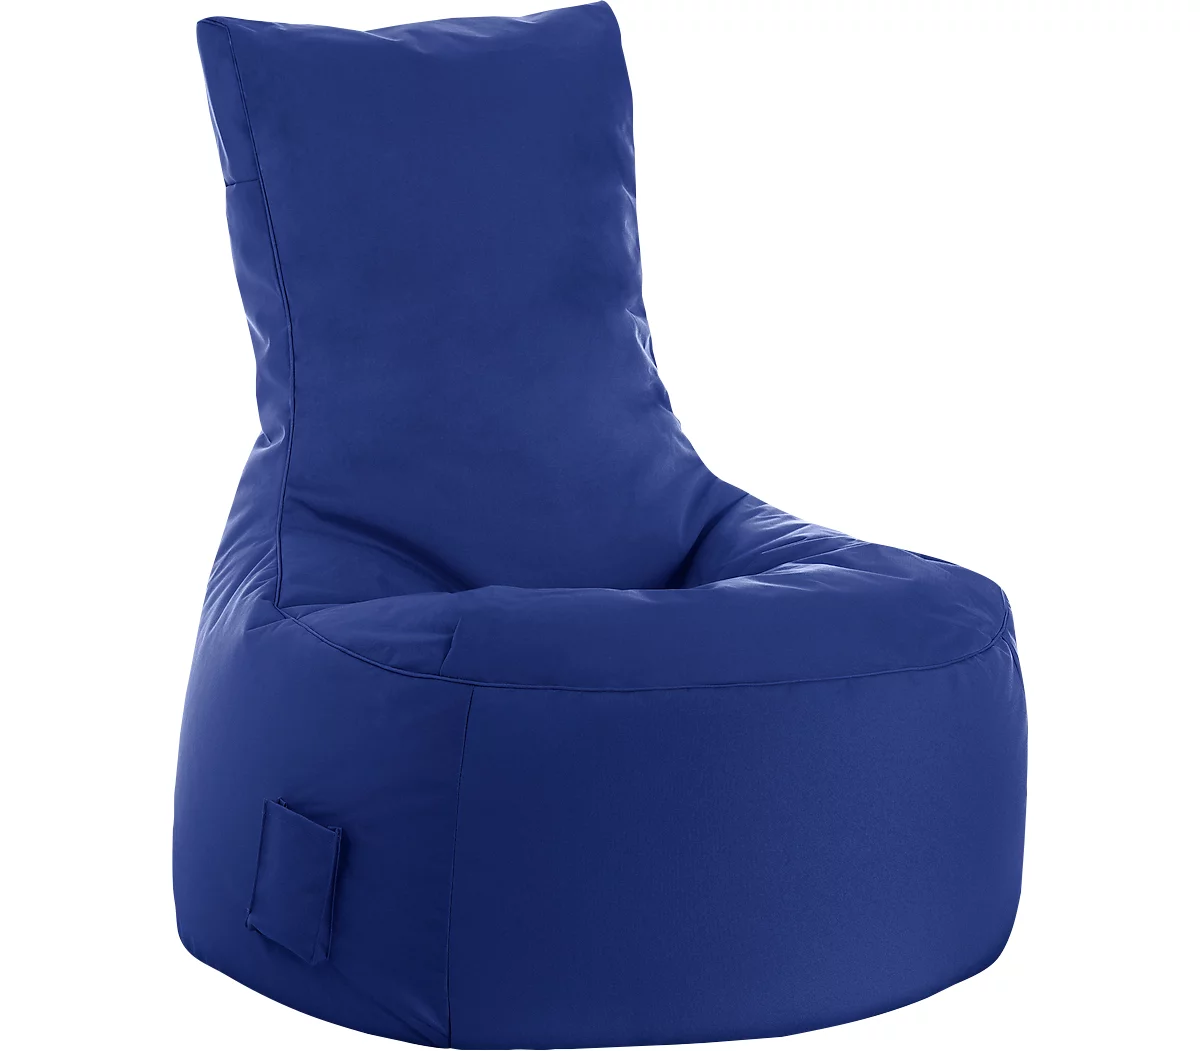 Saco de asiento swing scuba®, 100% poliéster, lavable, An 650 x P 900 x Al 950 mm, azul oscuro